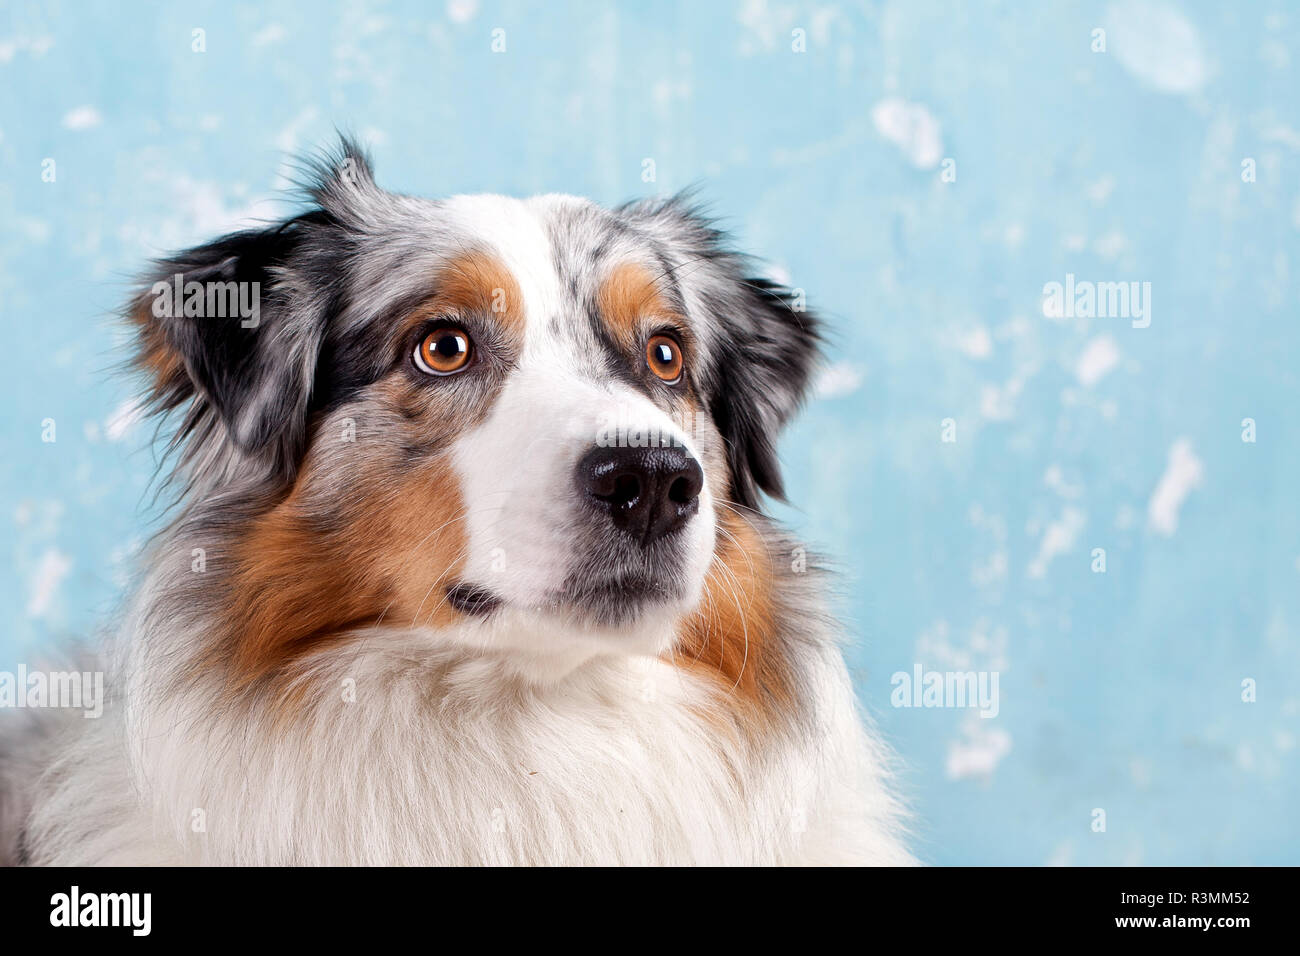 australian sheepdog portrait Stock Photo